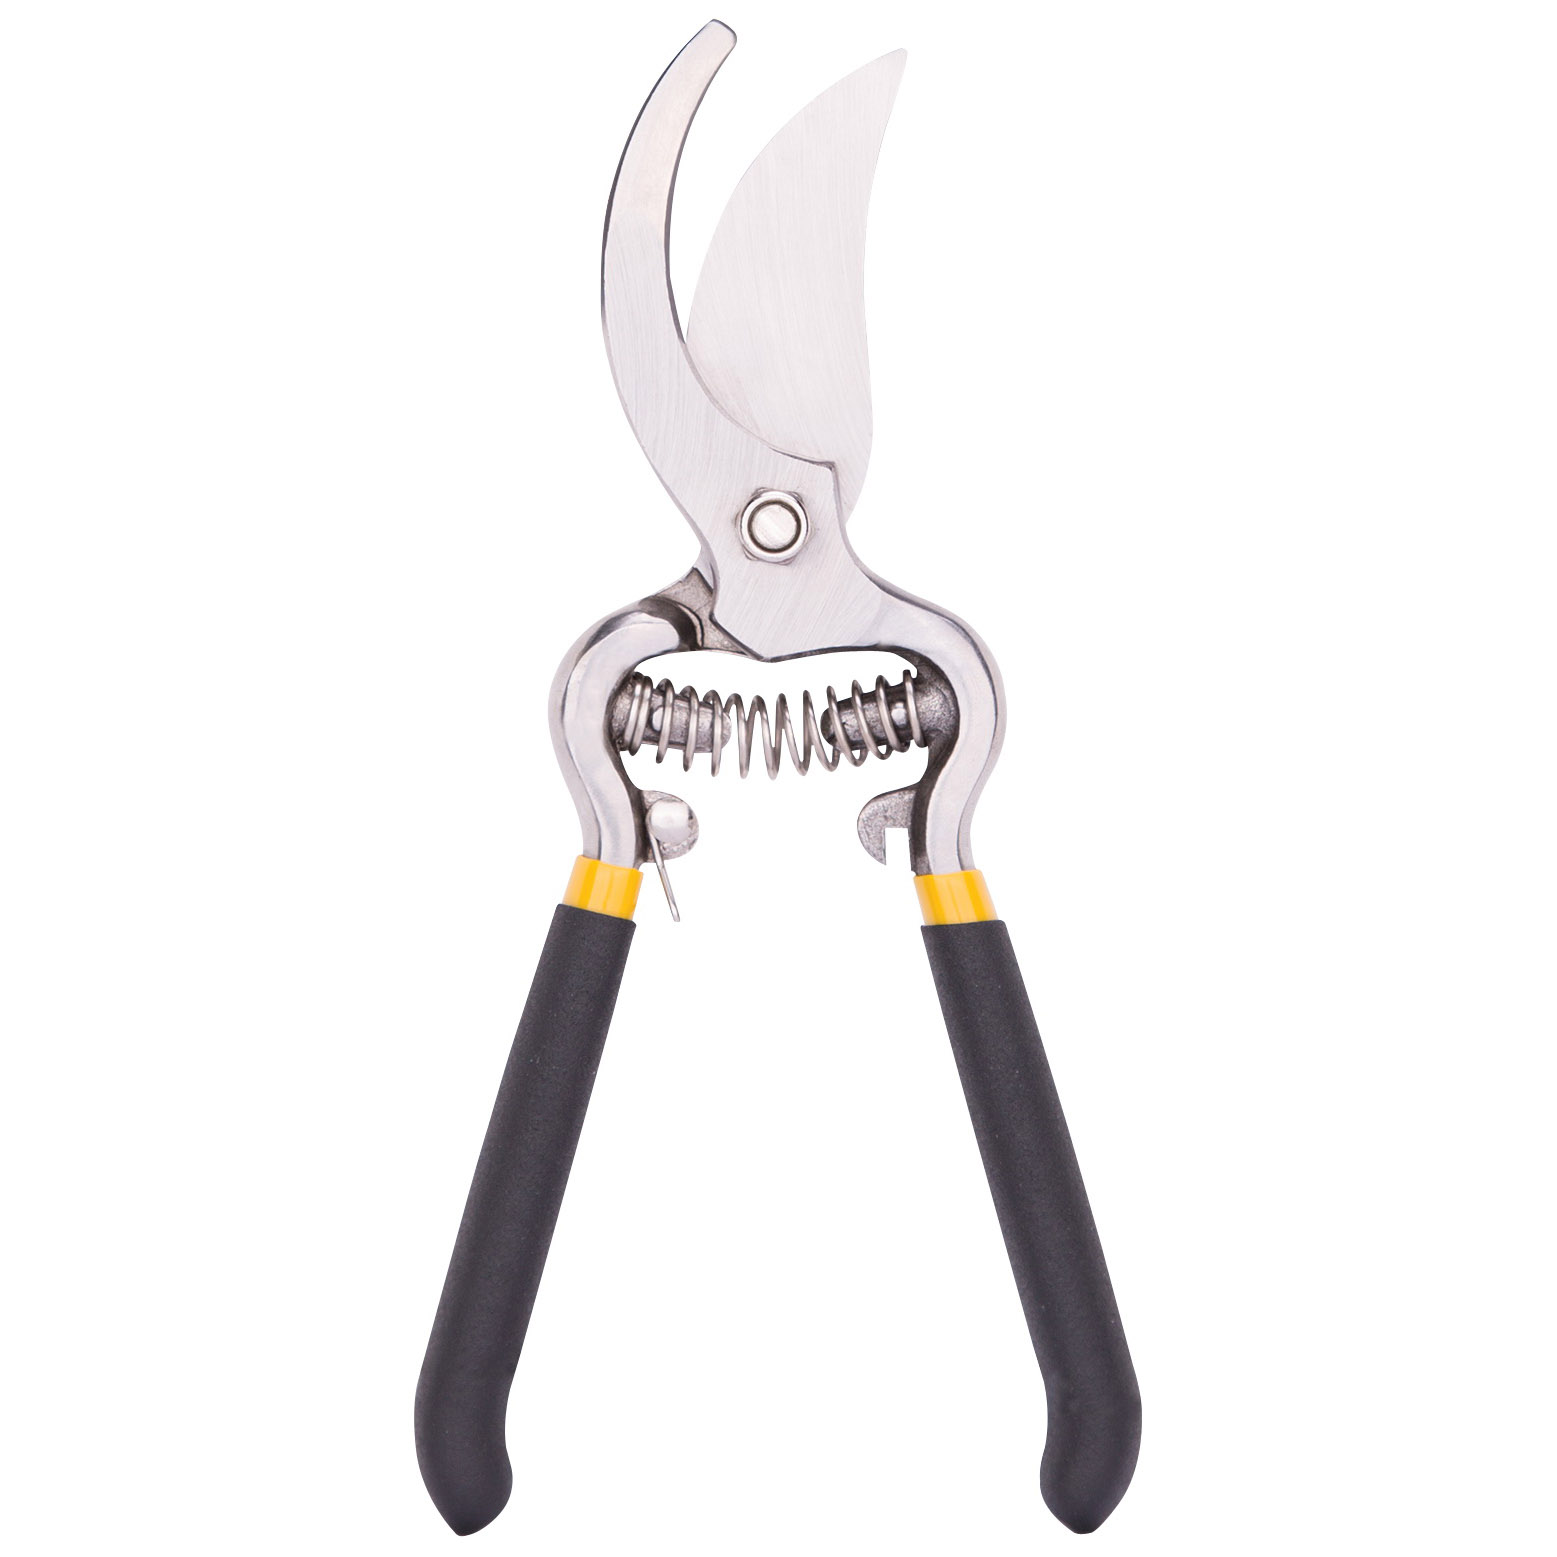 SE3218 Pruning Shear, 1/2 in Cutting Capacity, Steel Blade, Steel Handle, Cushion-Grip Handle